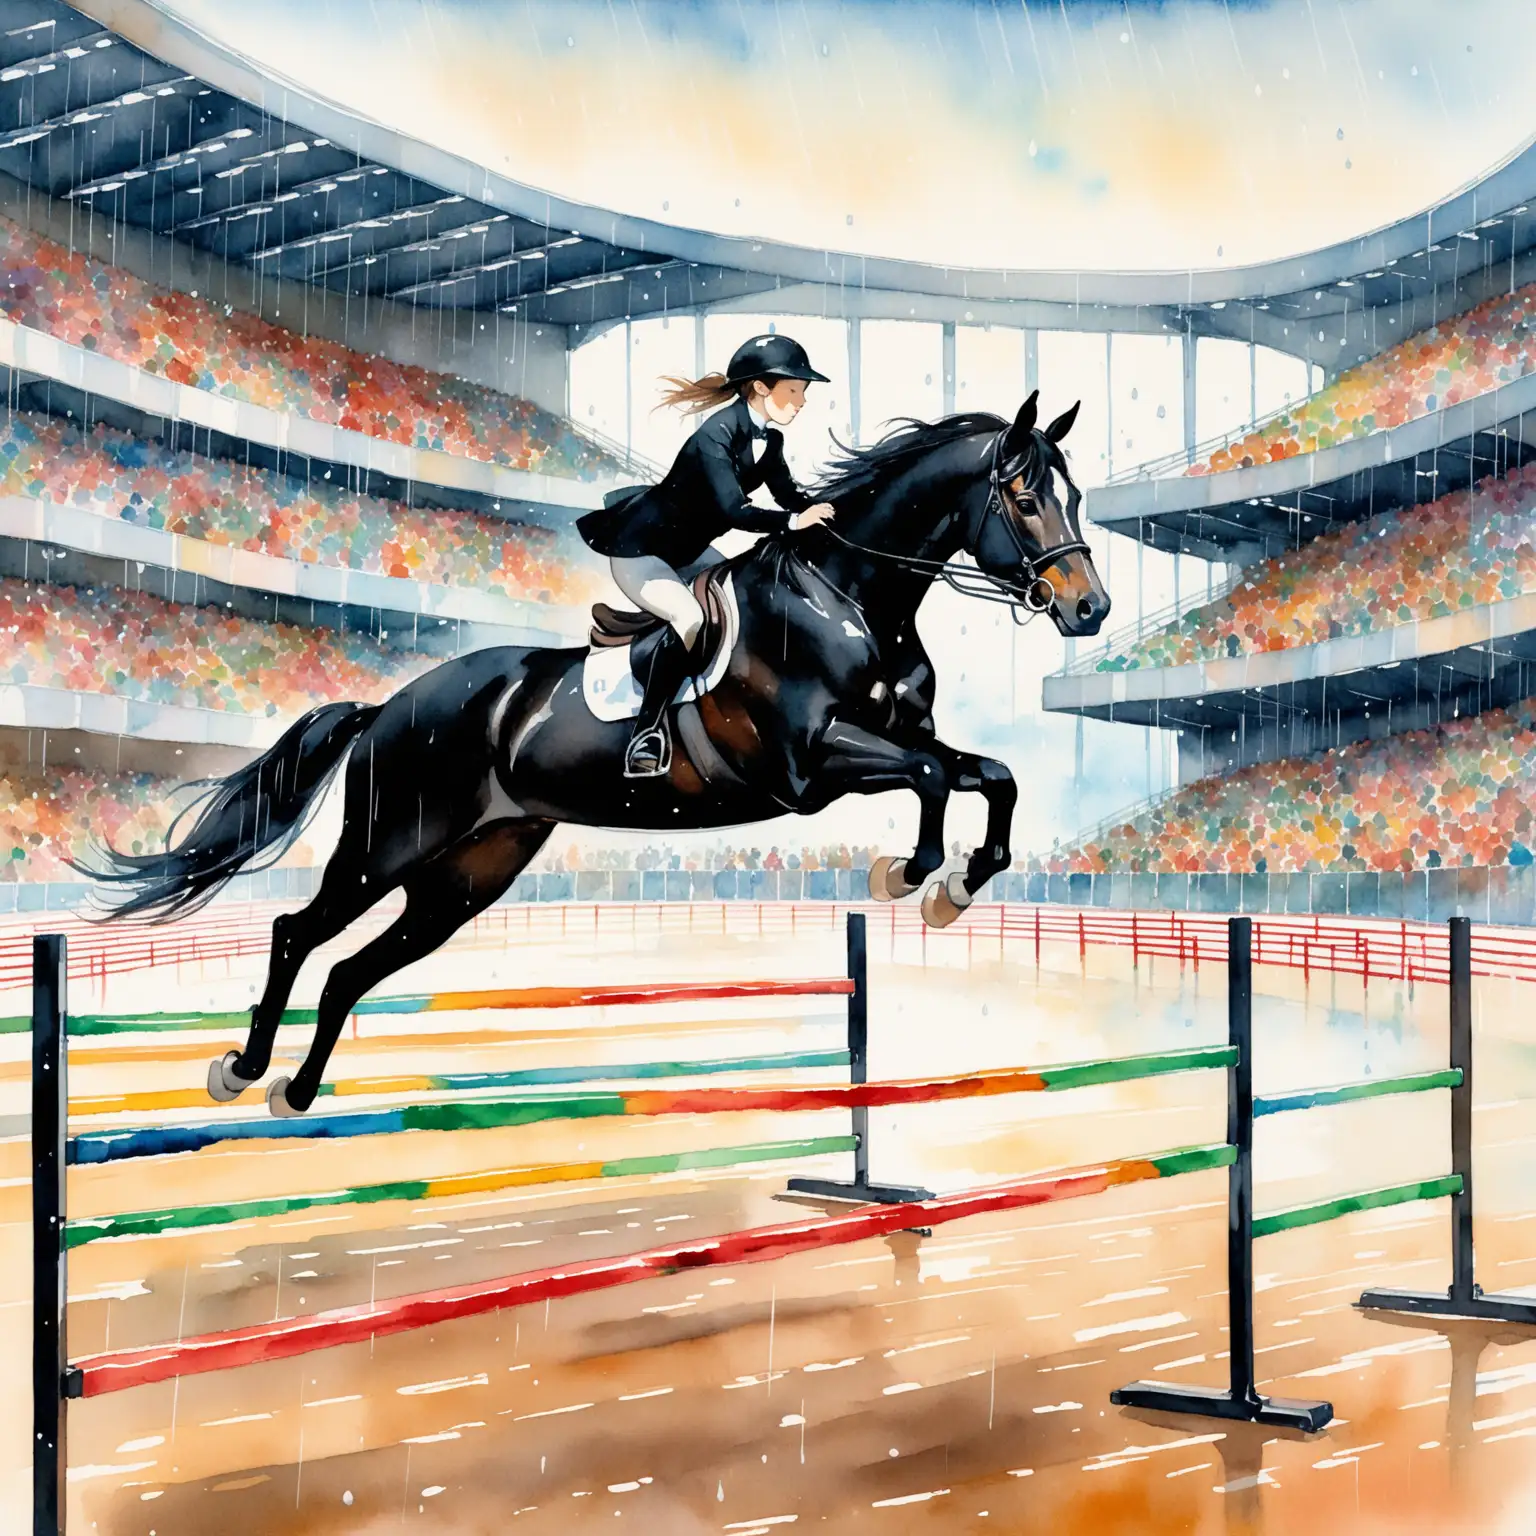 Elegant Black Horse Showjumping in a Vibrant Arena